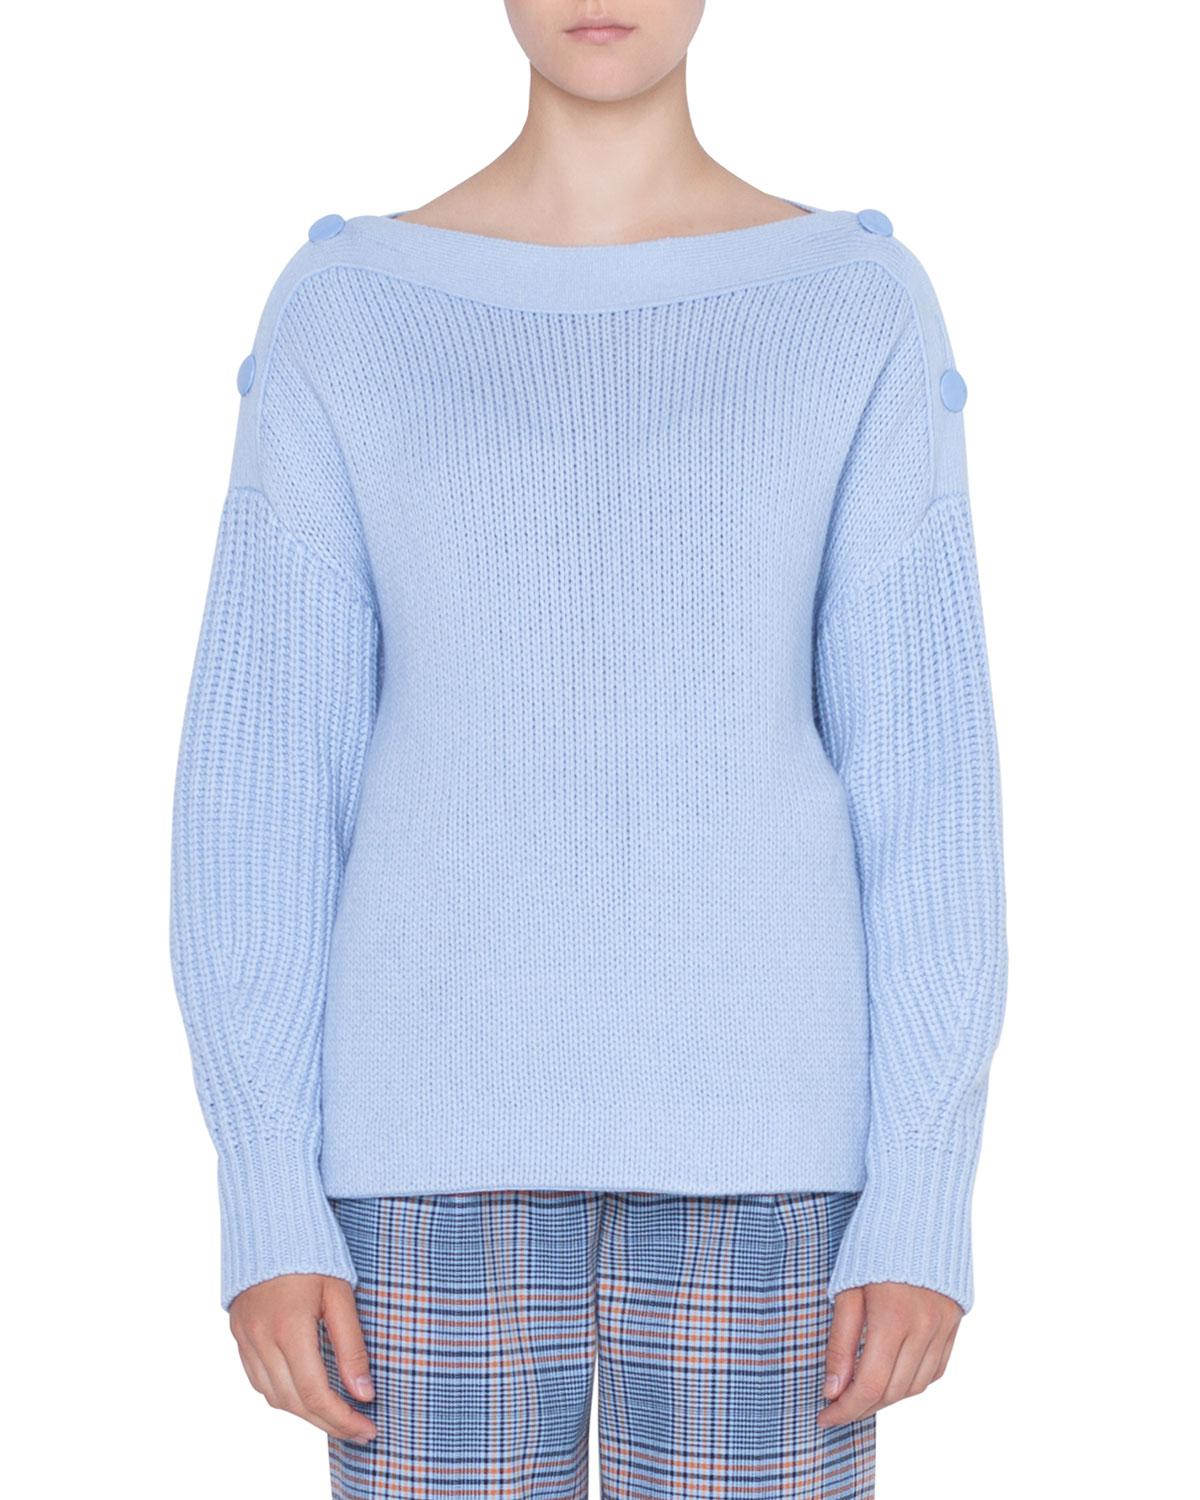 Lyst - Akris Punto Button Shoulder Sweater in Blue